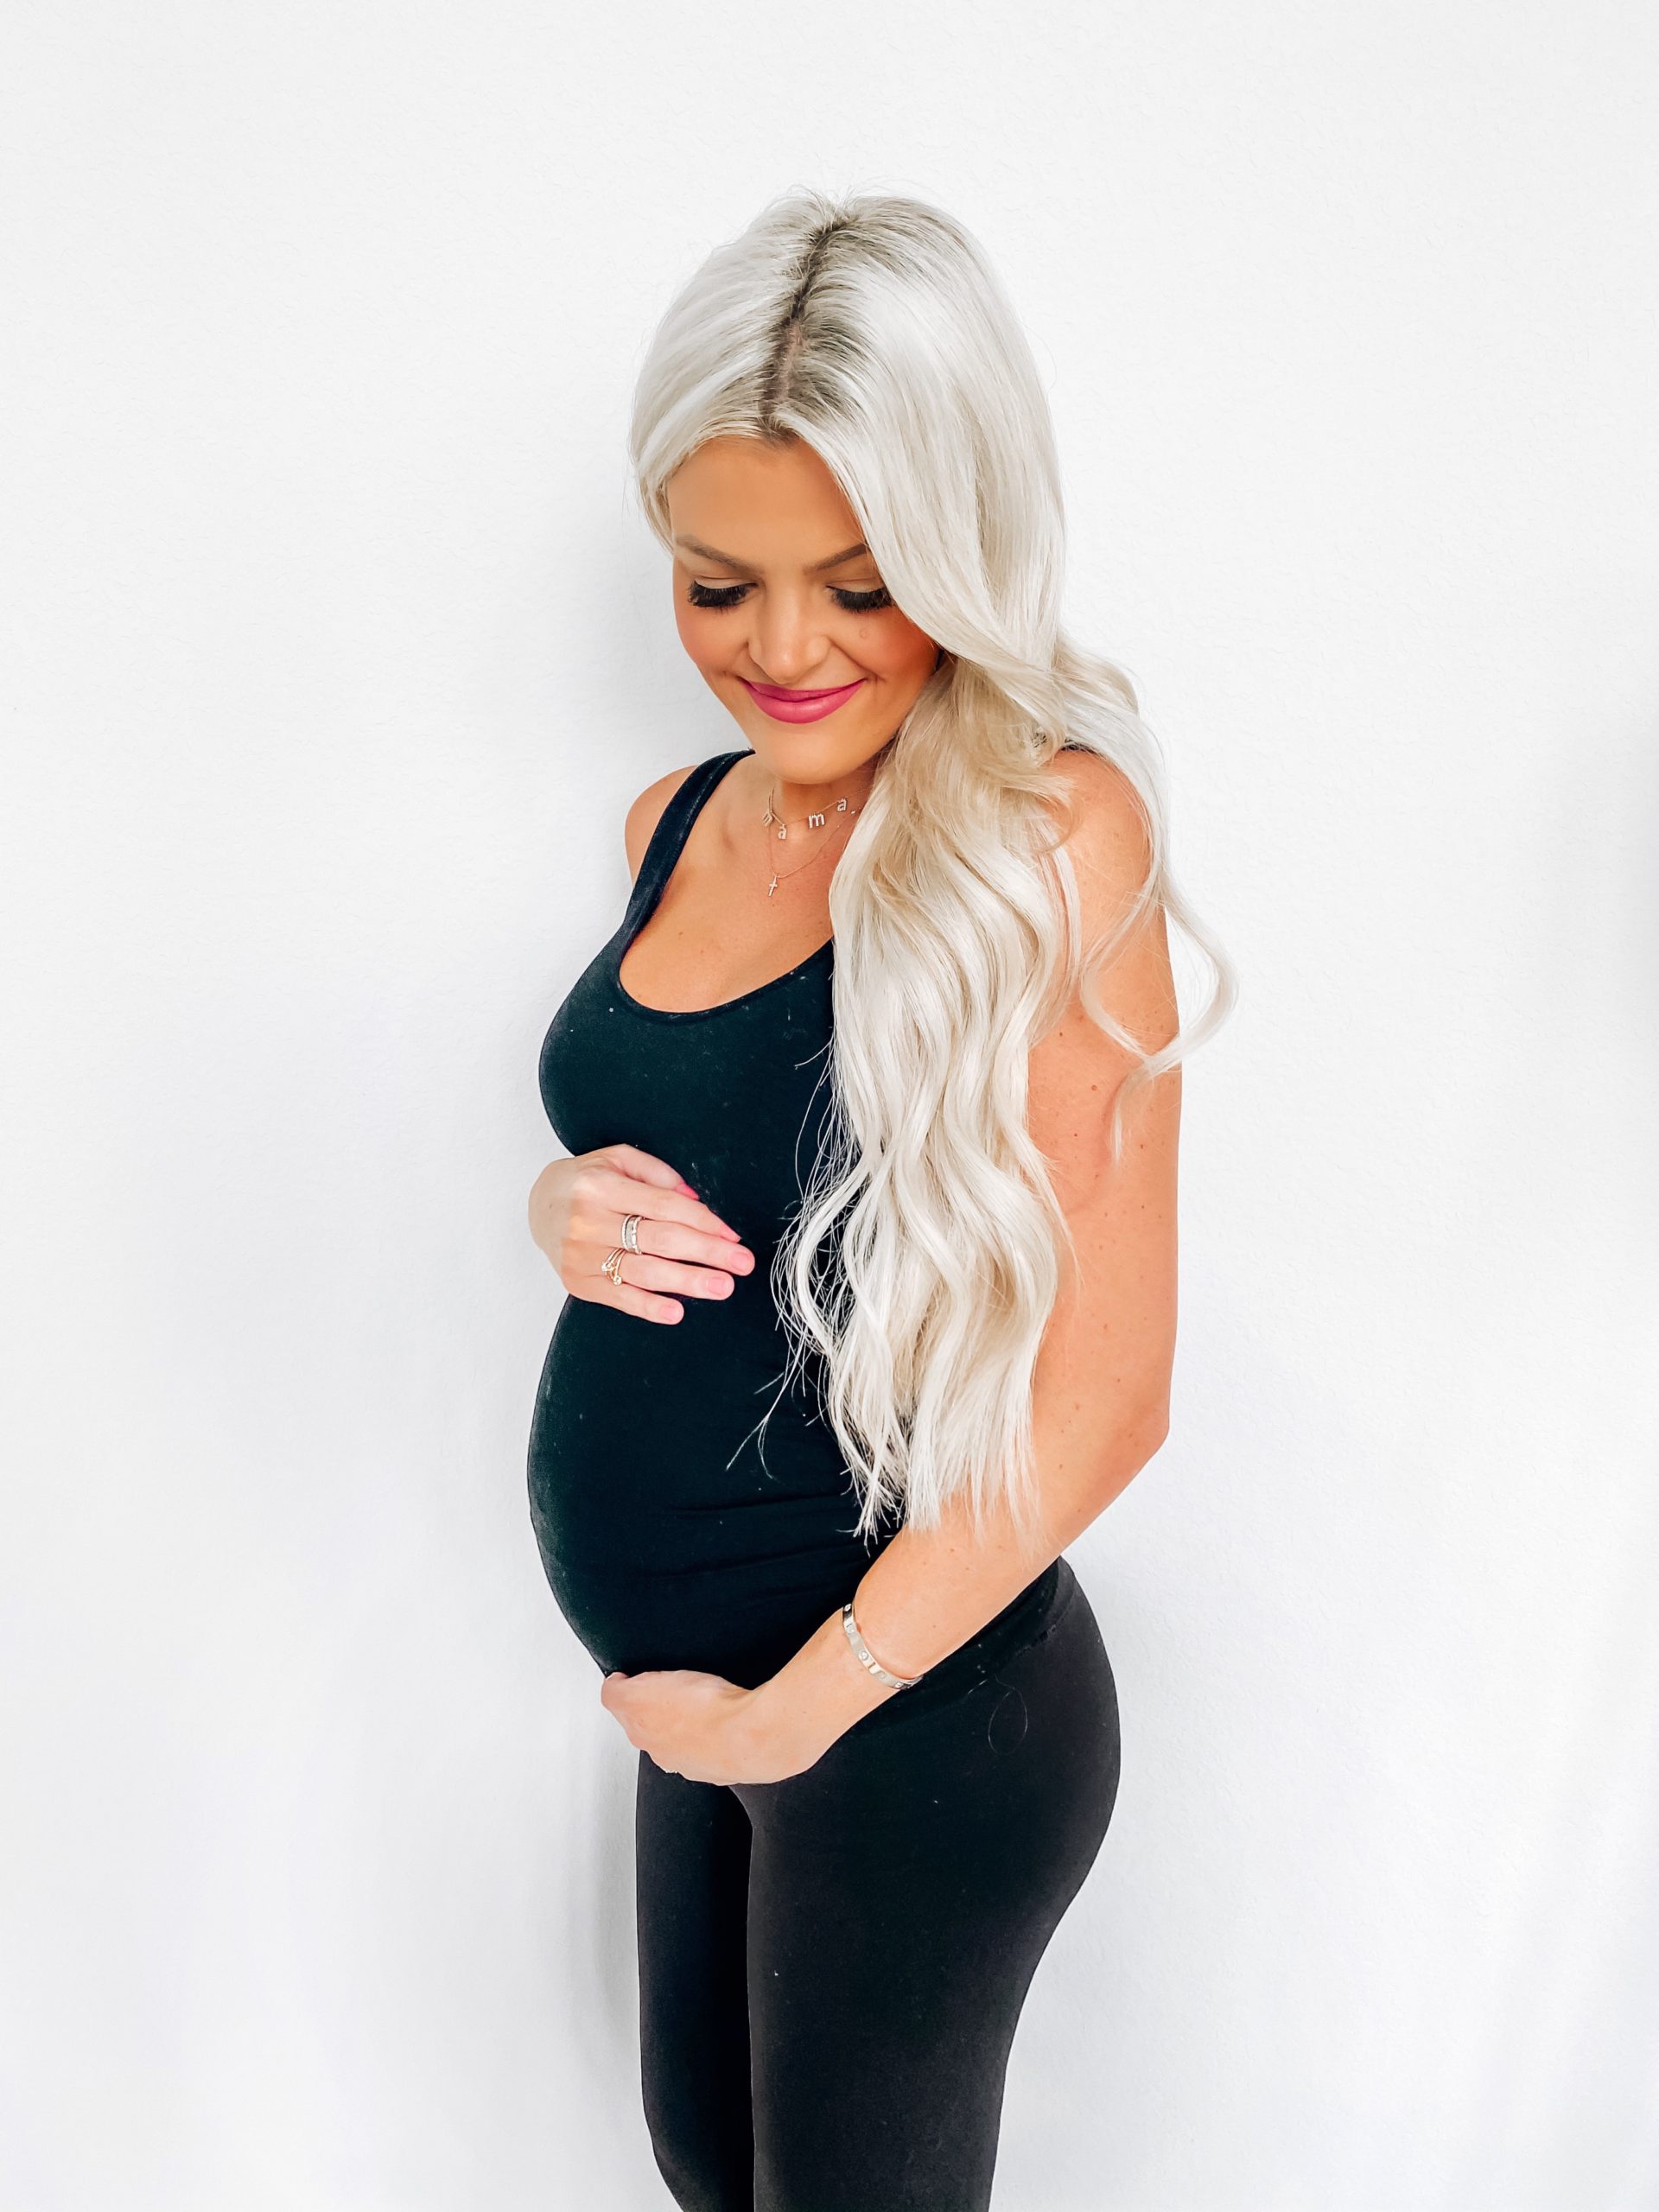 Pregnant During Covid 19 Pandemic | Houston motherhood | Jessica Crum